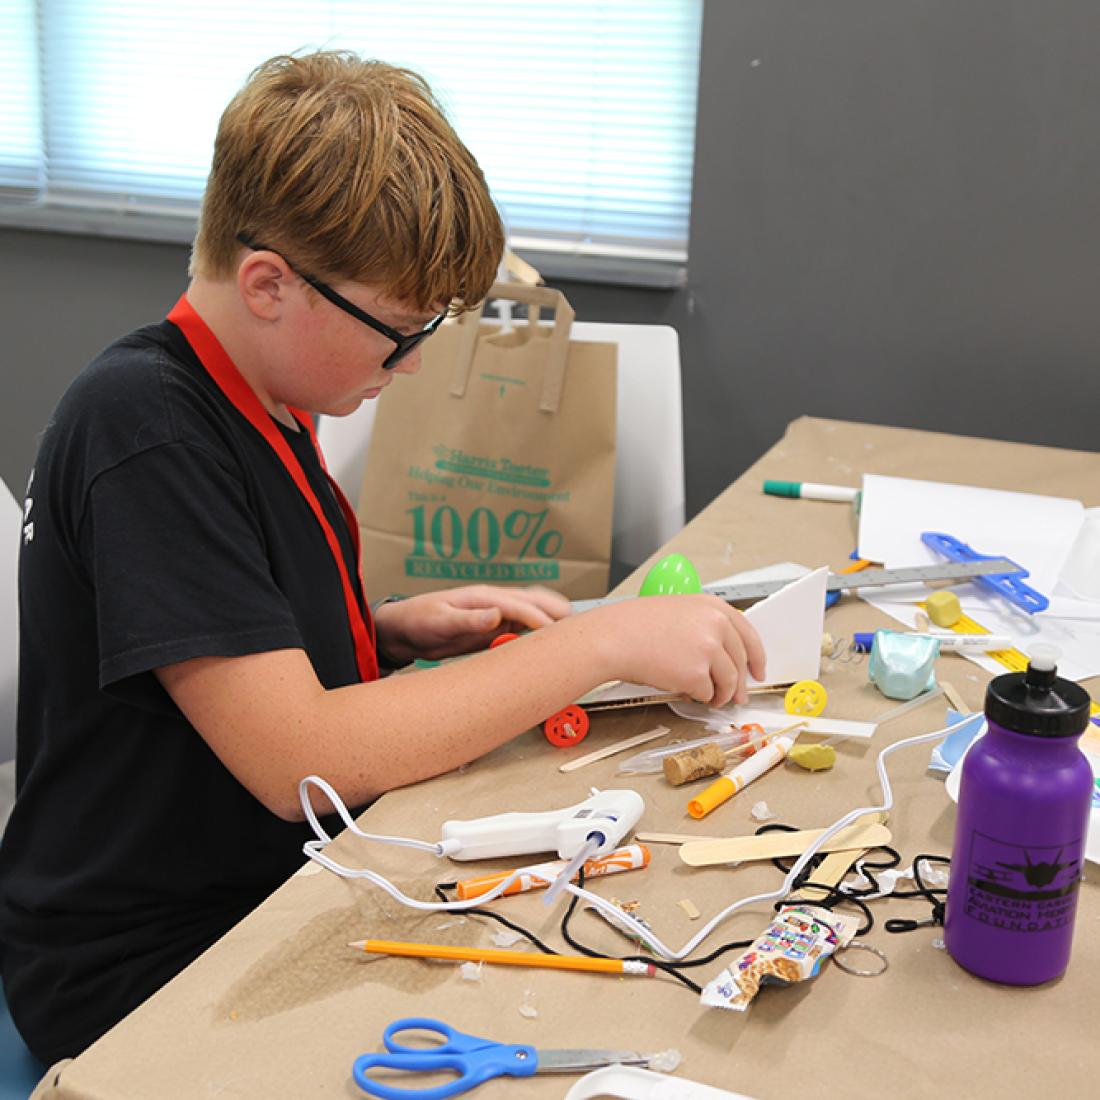 Boy using hot glue gun on craft